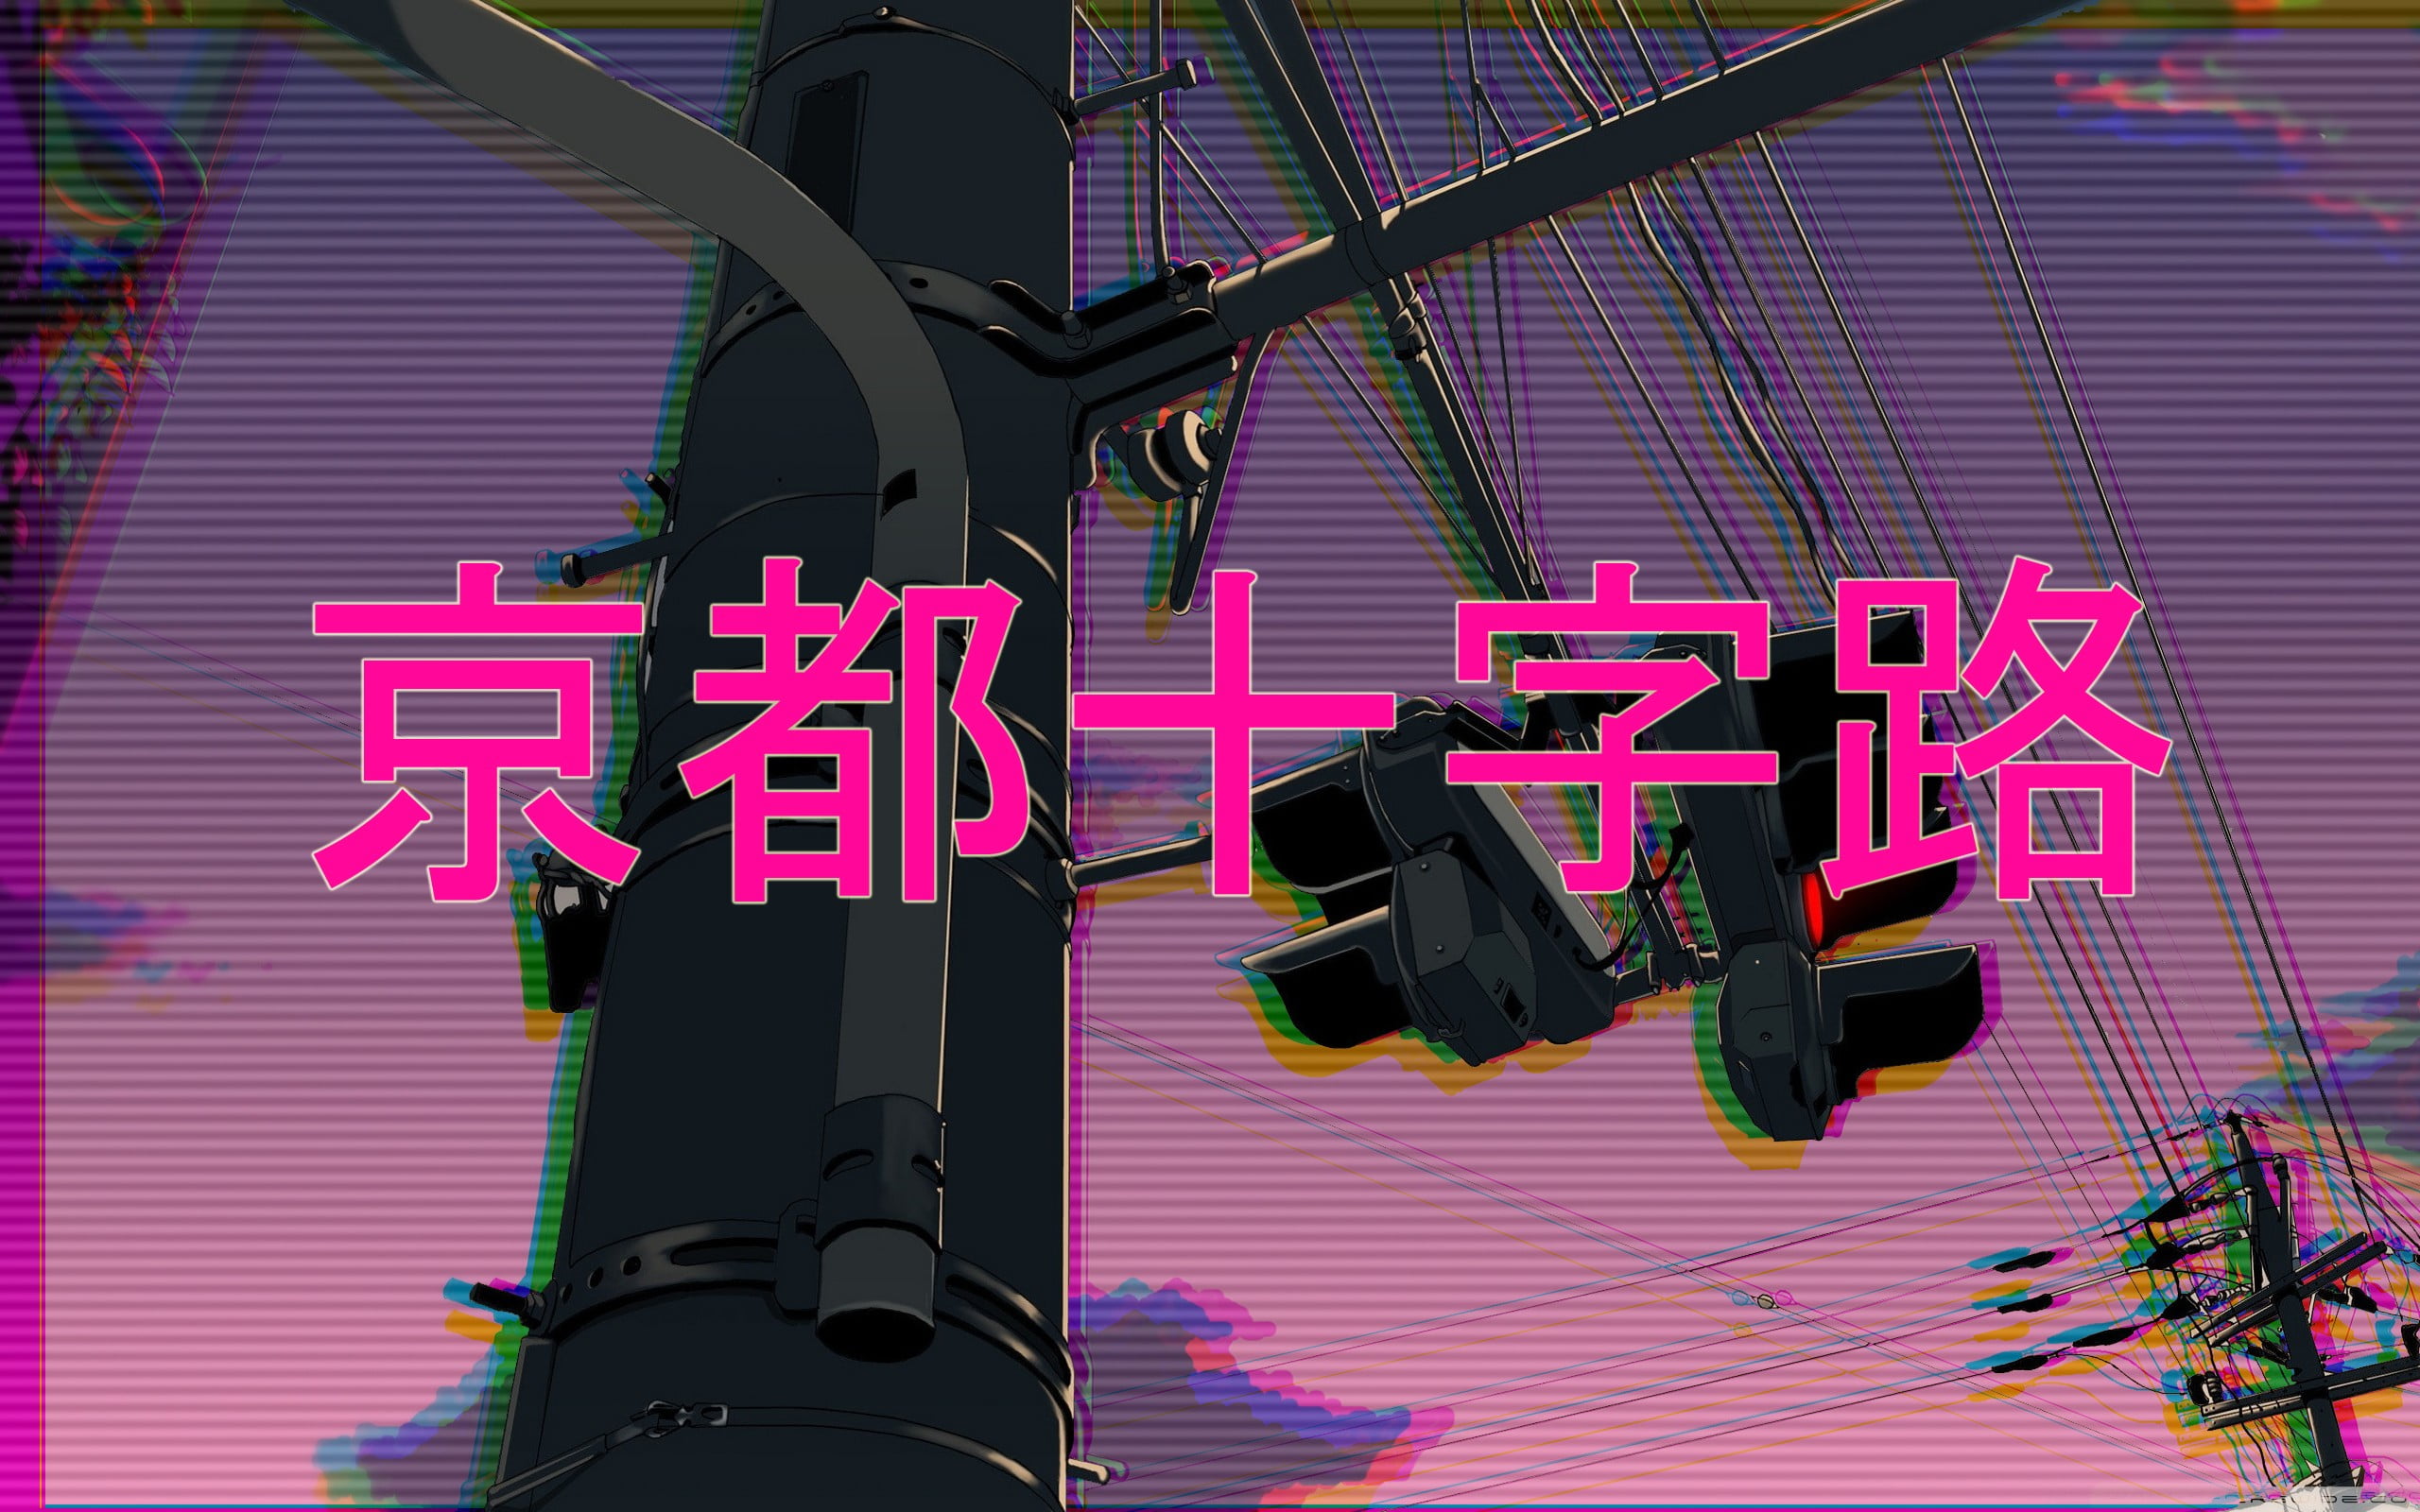 kanji text wallpaper, vaporwave, 1980s, 80sCity, artwork, pixel art